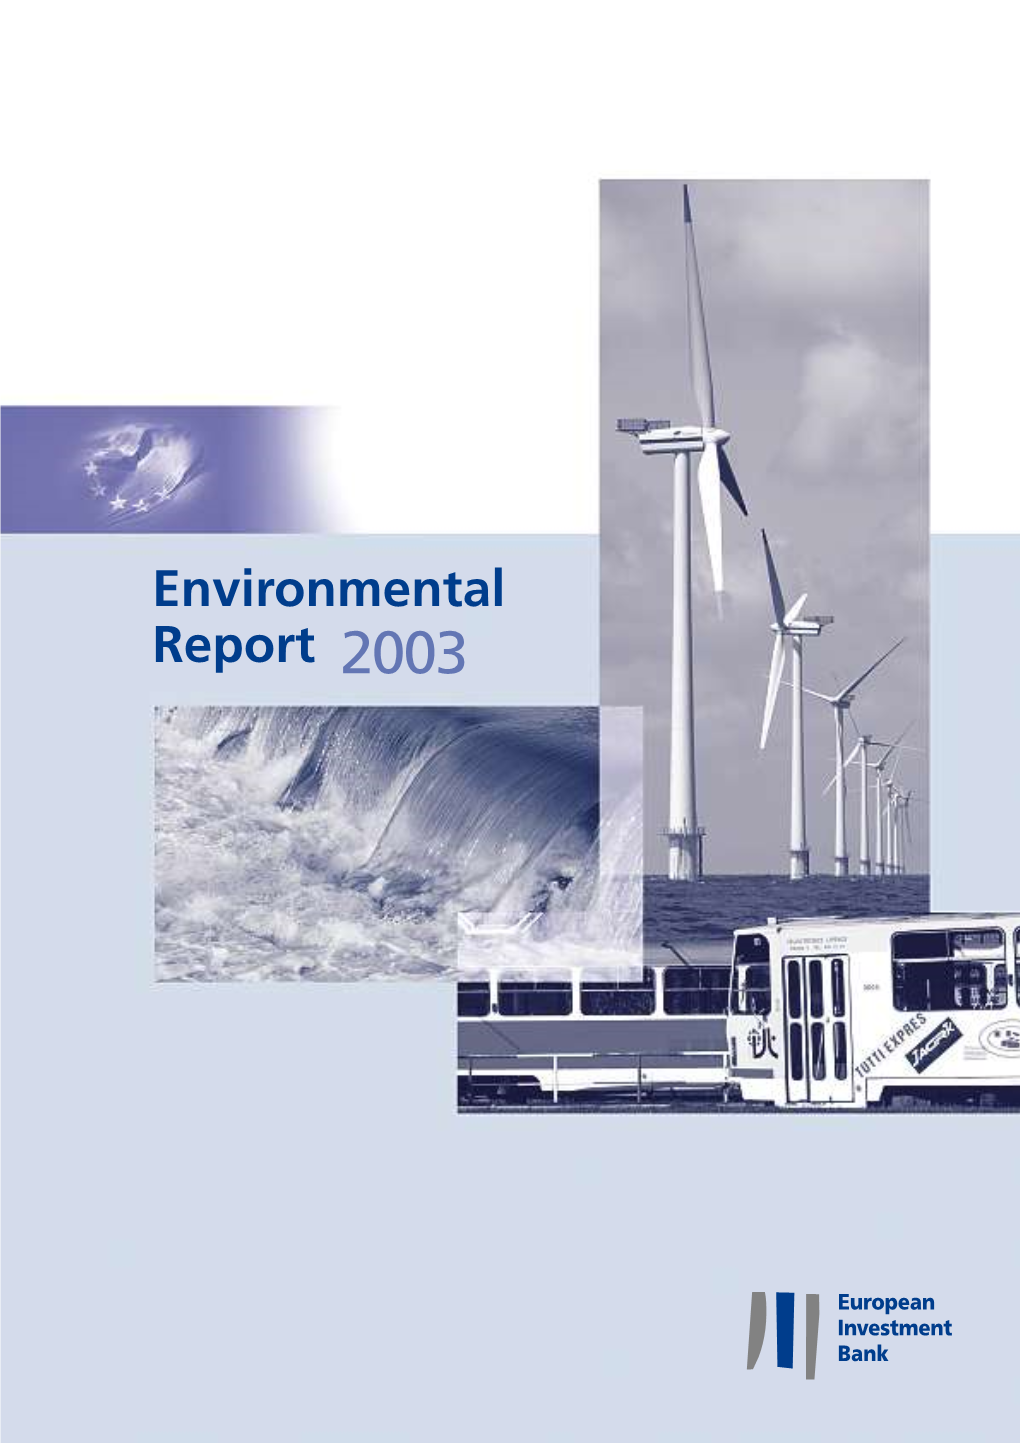 Environmental Report 2003 Contents